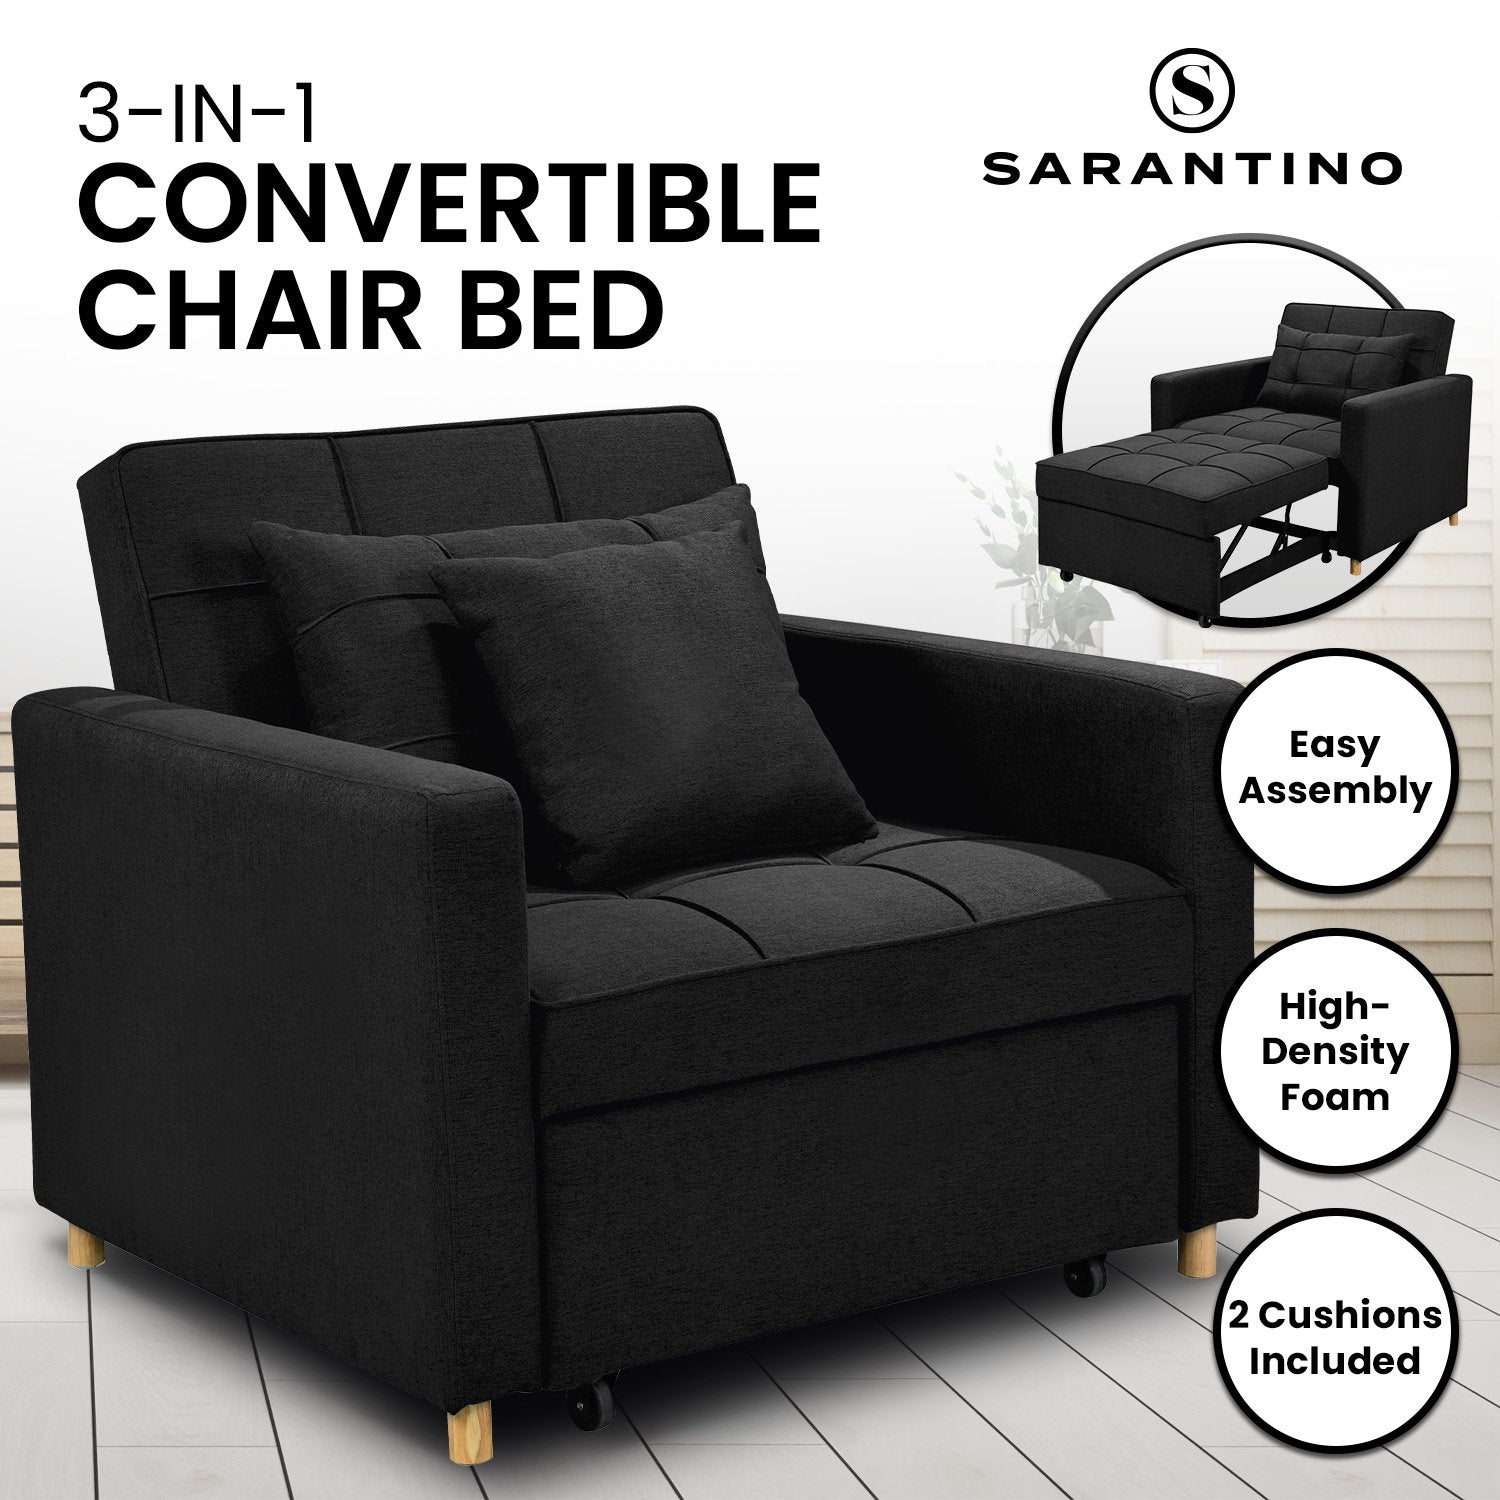 Sarantino Suri 3-in-1 Convertible Lounge Chair Bed - Black - 0